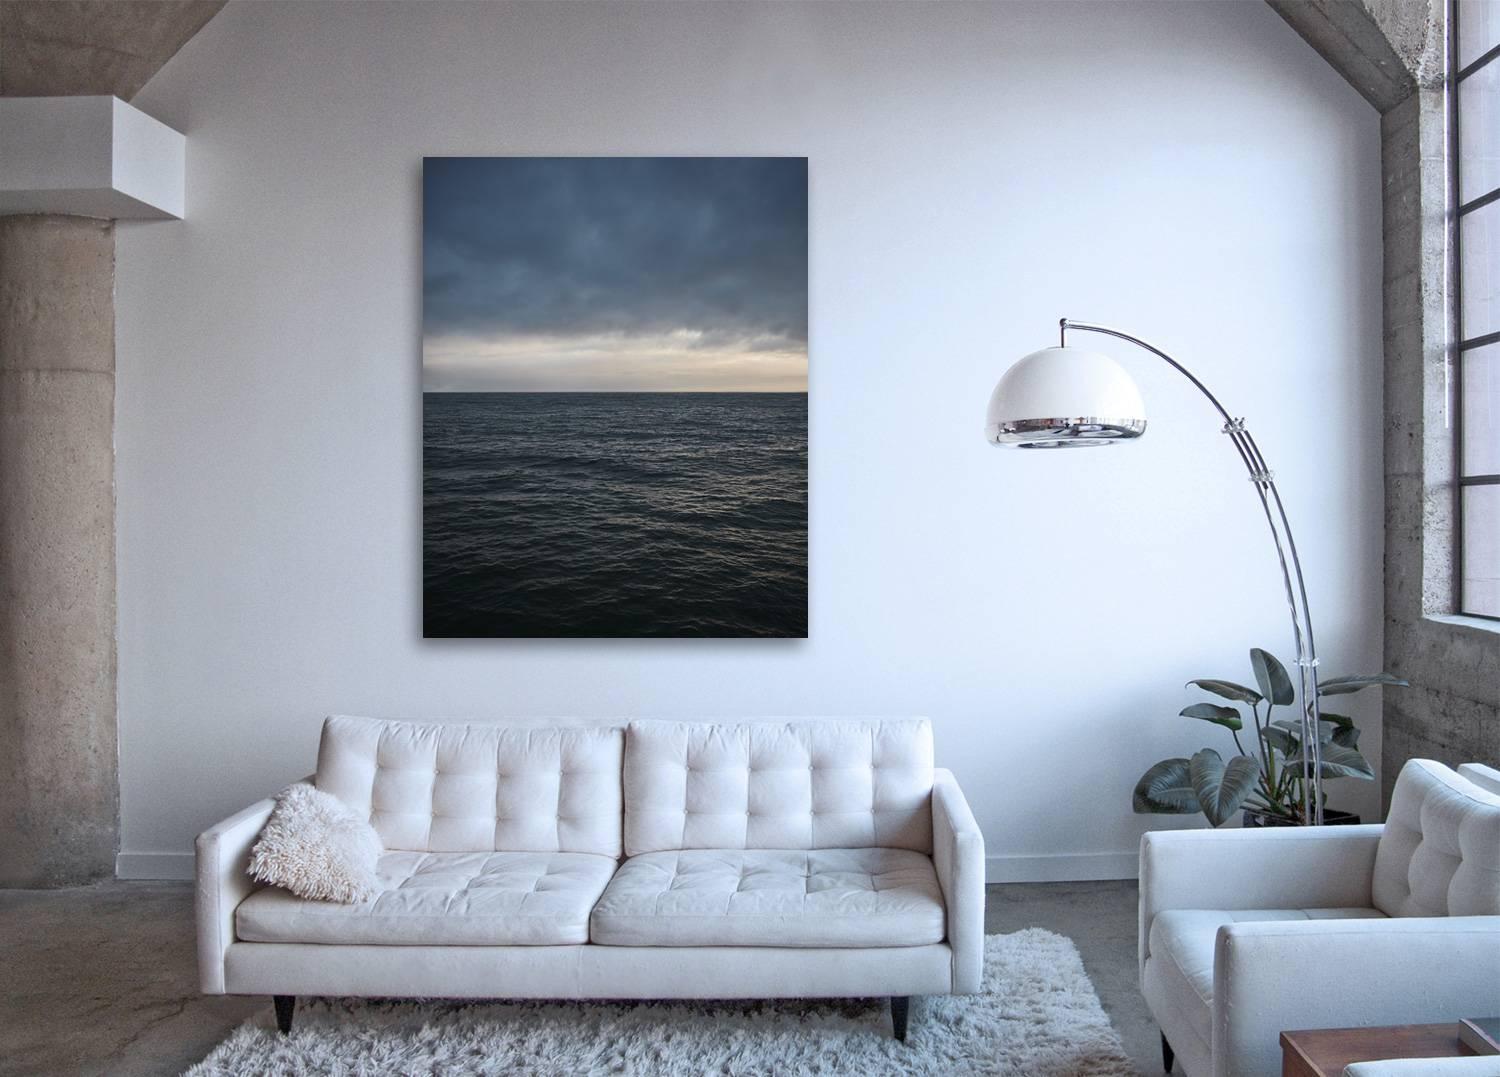 Seascape IV (Hommage à Mark Rothko) - photographie abstraite grand format de paysage marin - Photograph de Frank Schott